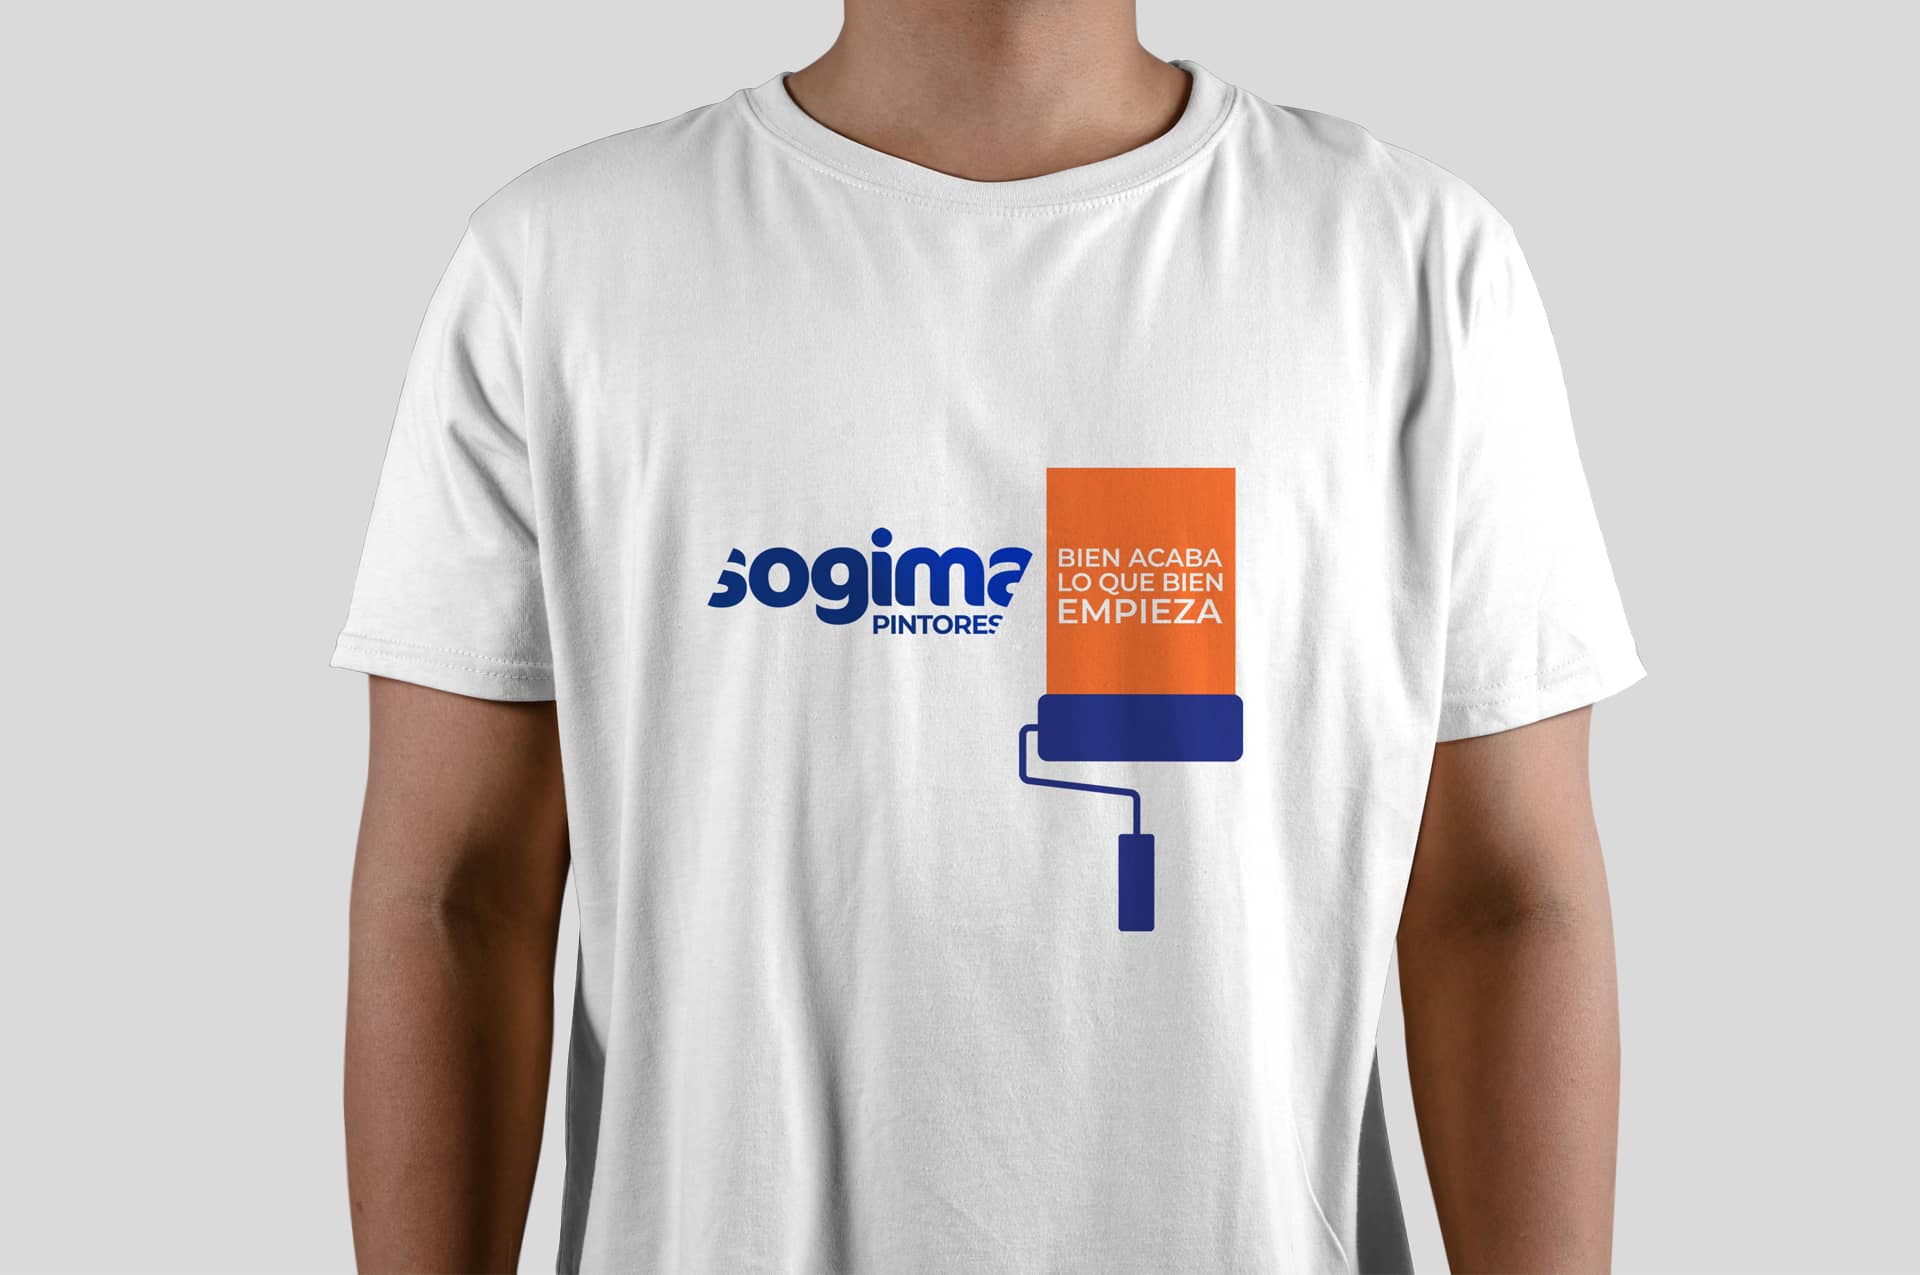 Camiseta blanca de trabajo Sogima branding por The Acctitude diseño web